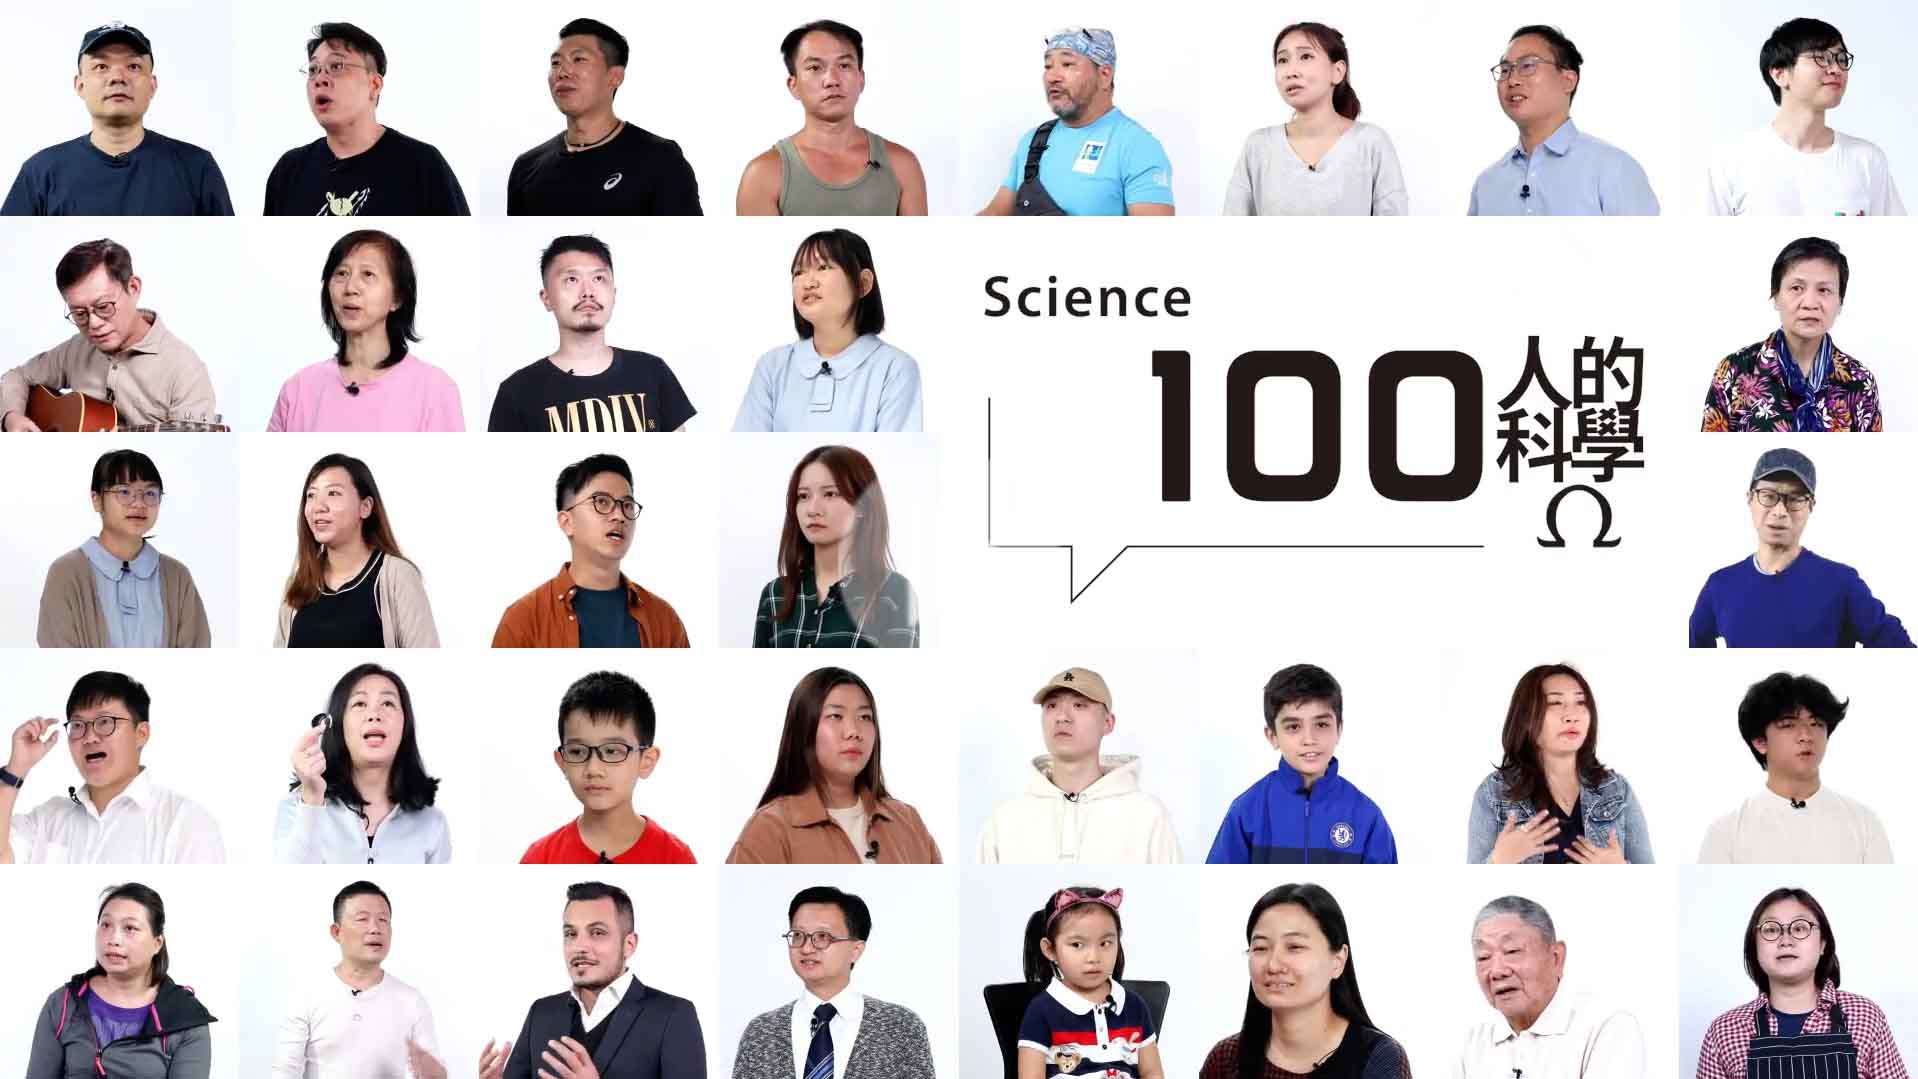 QKPOST: Listening - Science100 Ω